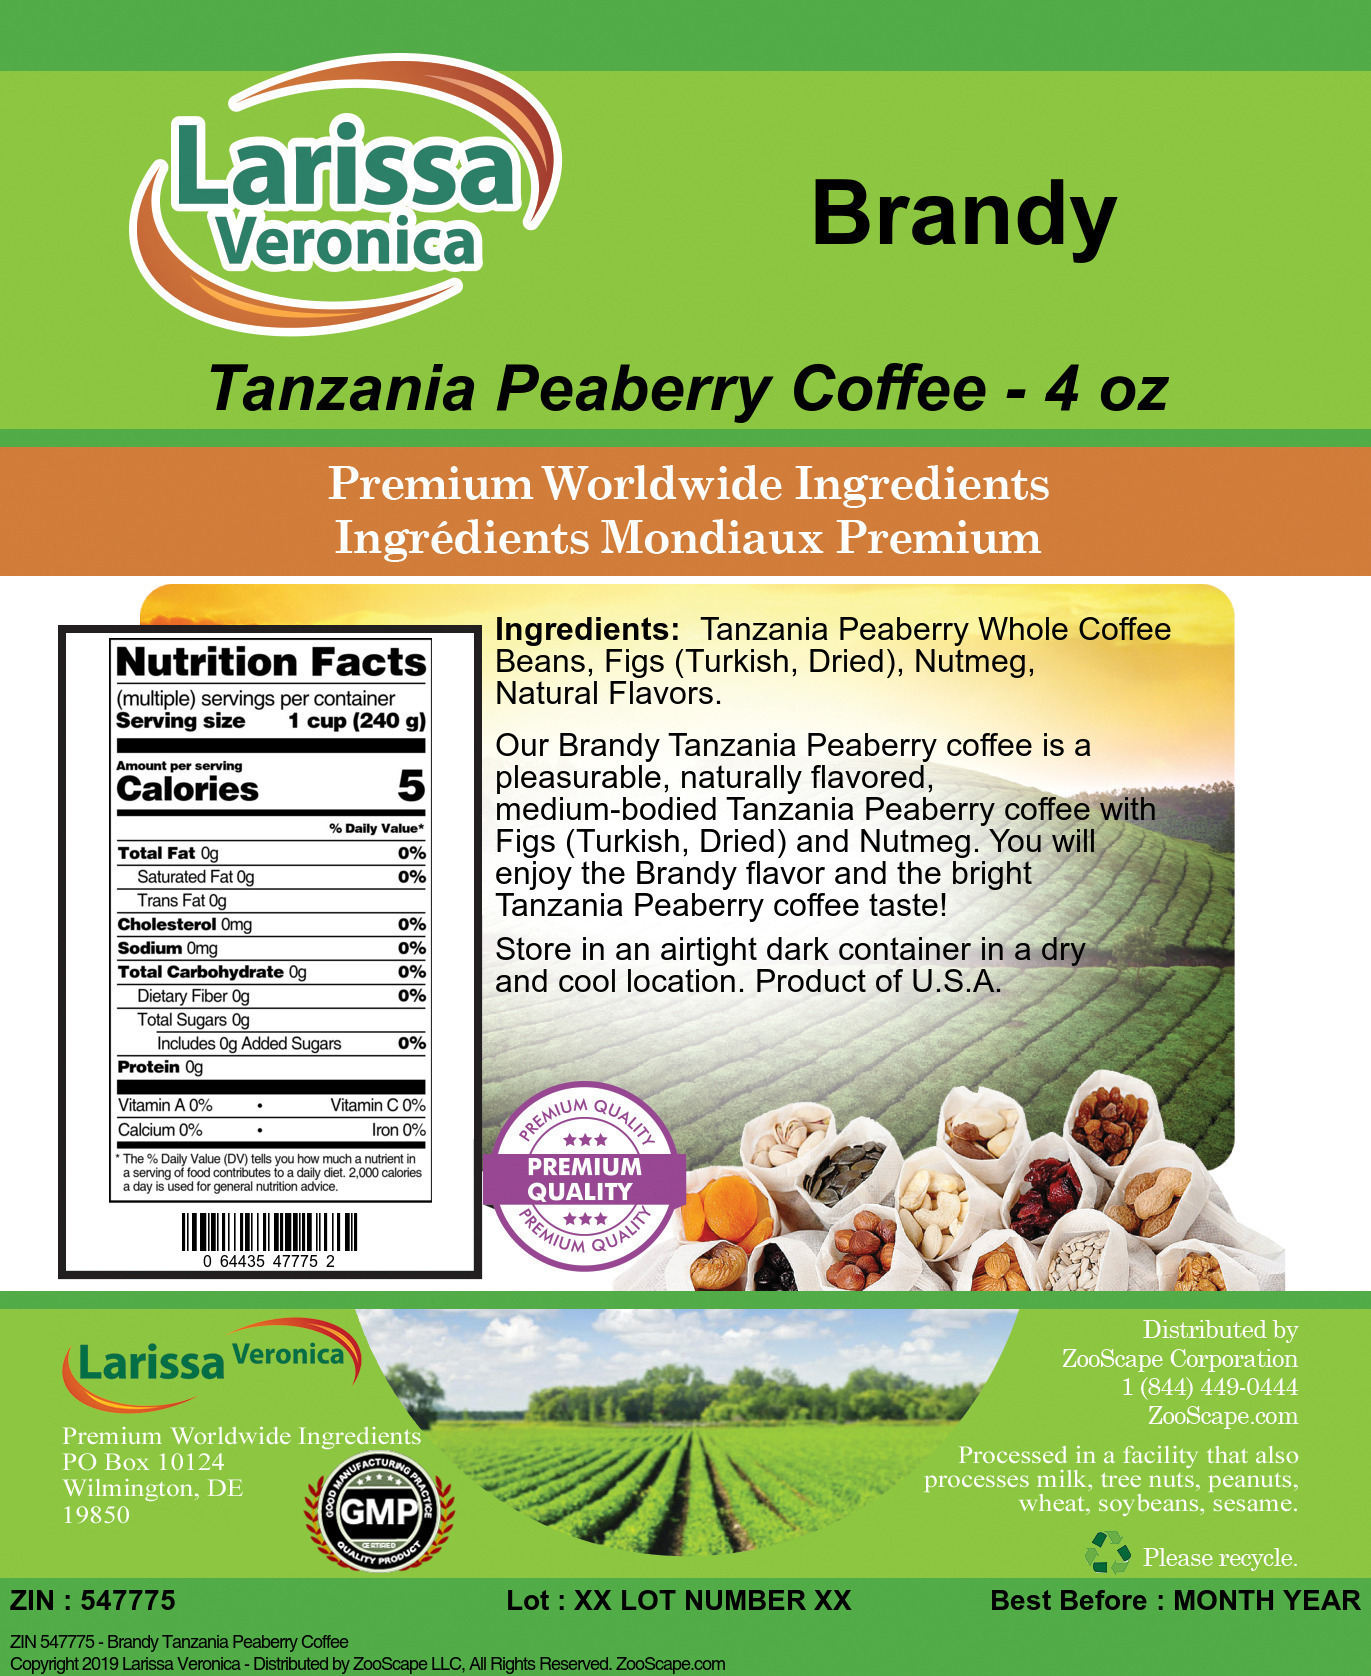 Brandy Tanzania Peaberry Coffee - Label